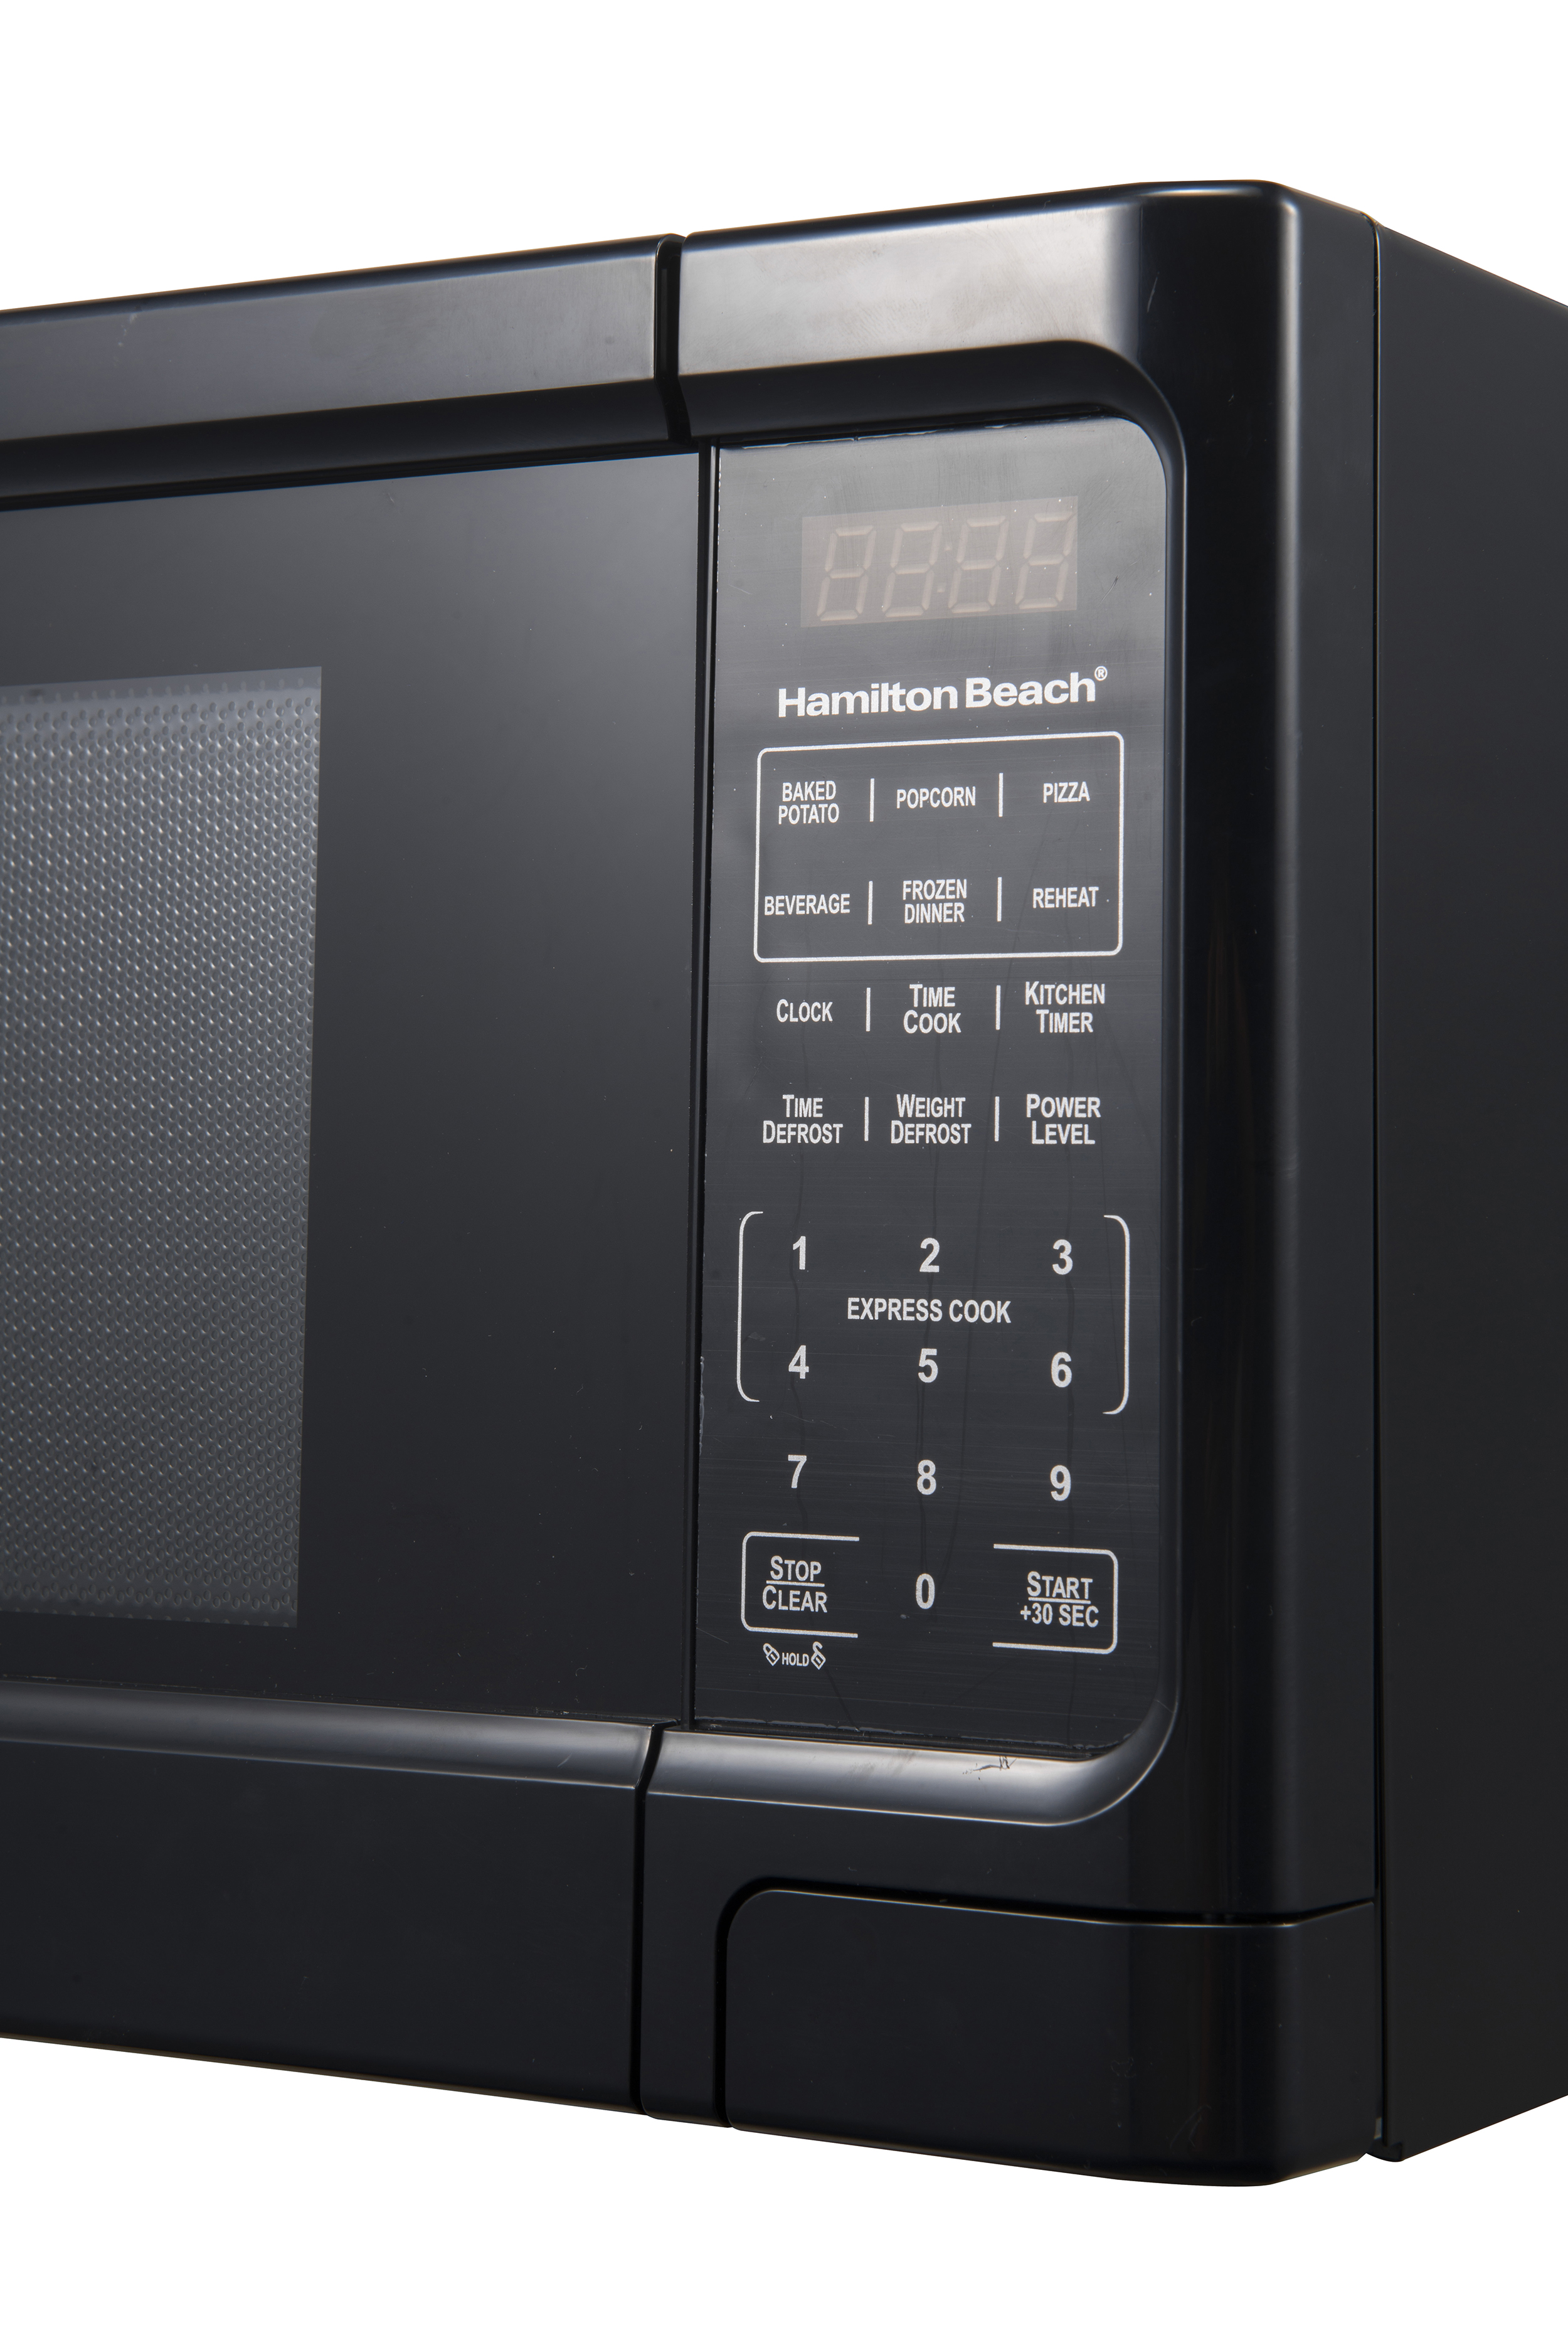 Hamilton Beach 1.1 cu. ft. Countertop Microwave Oven, 1000 Watts, Black - image 4 of 9